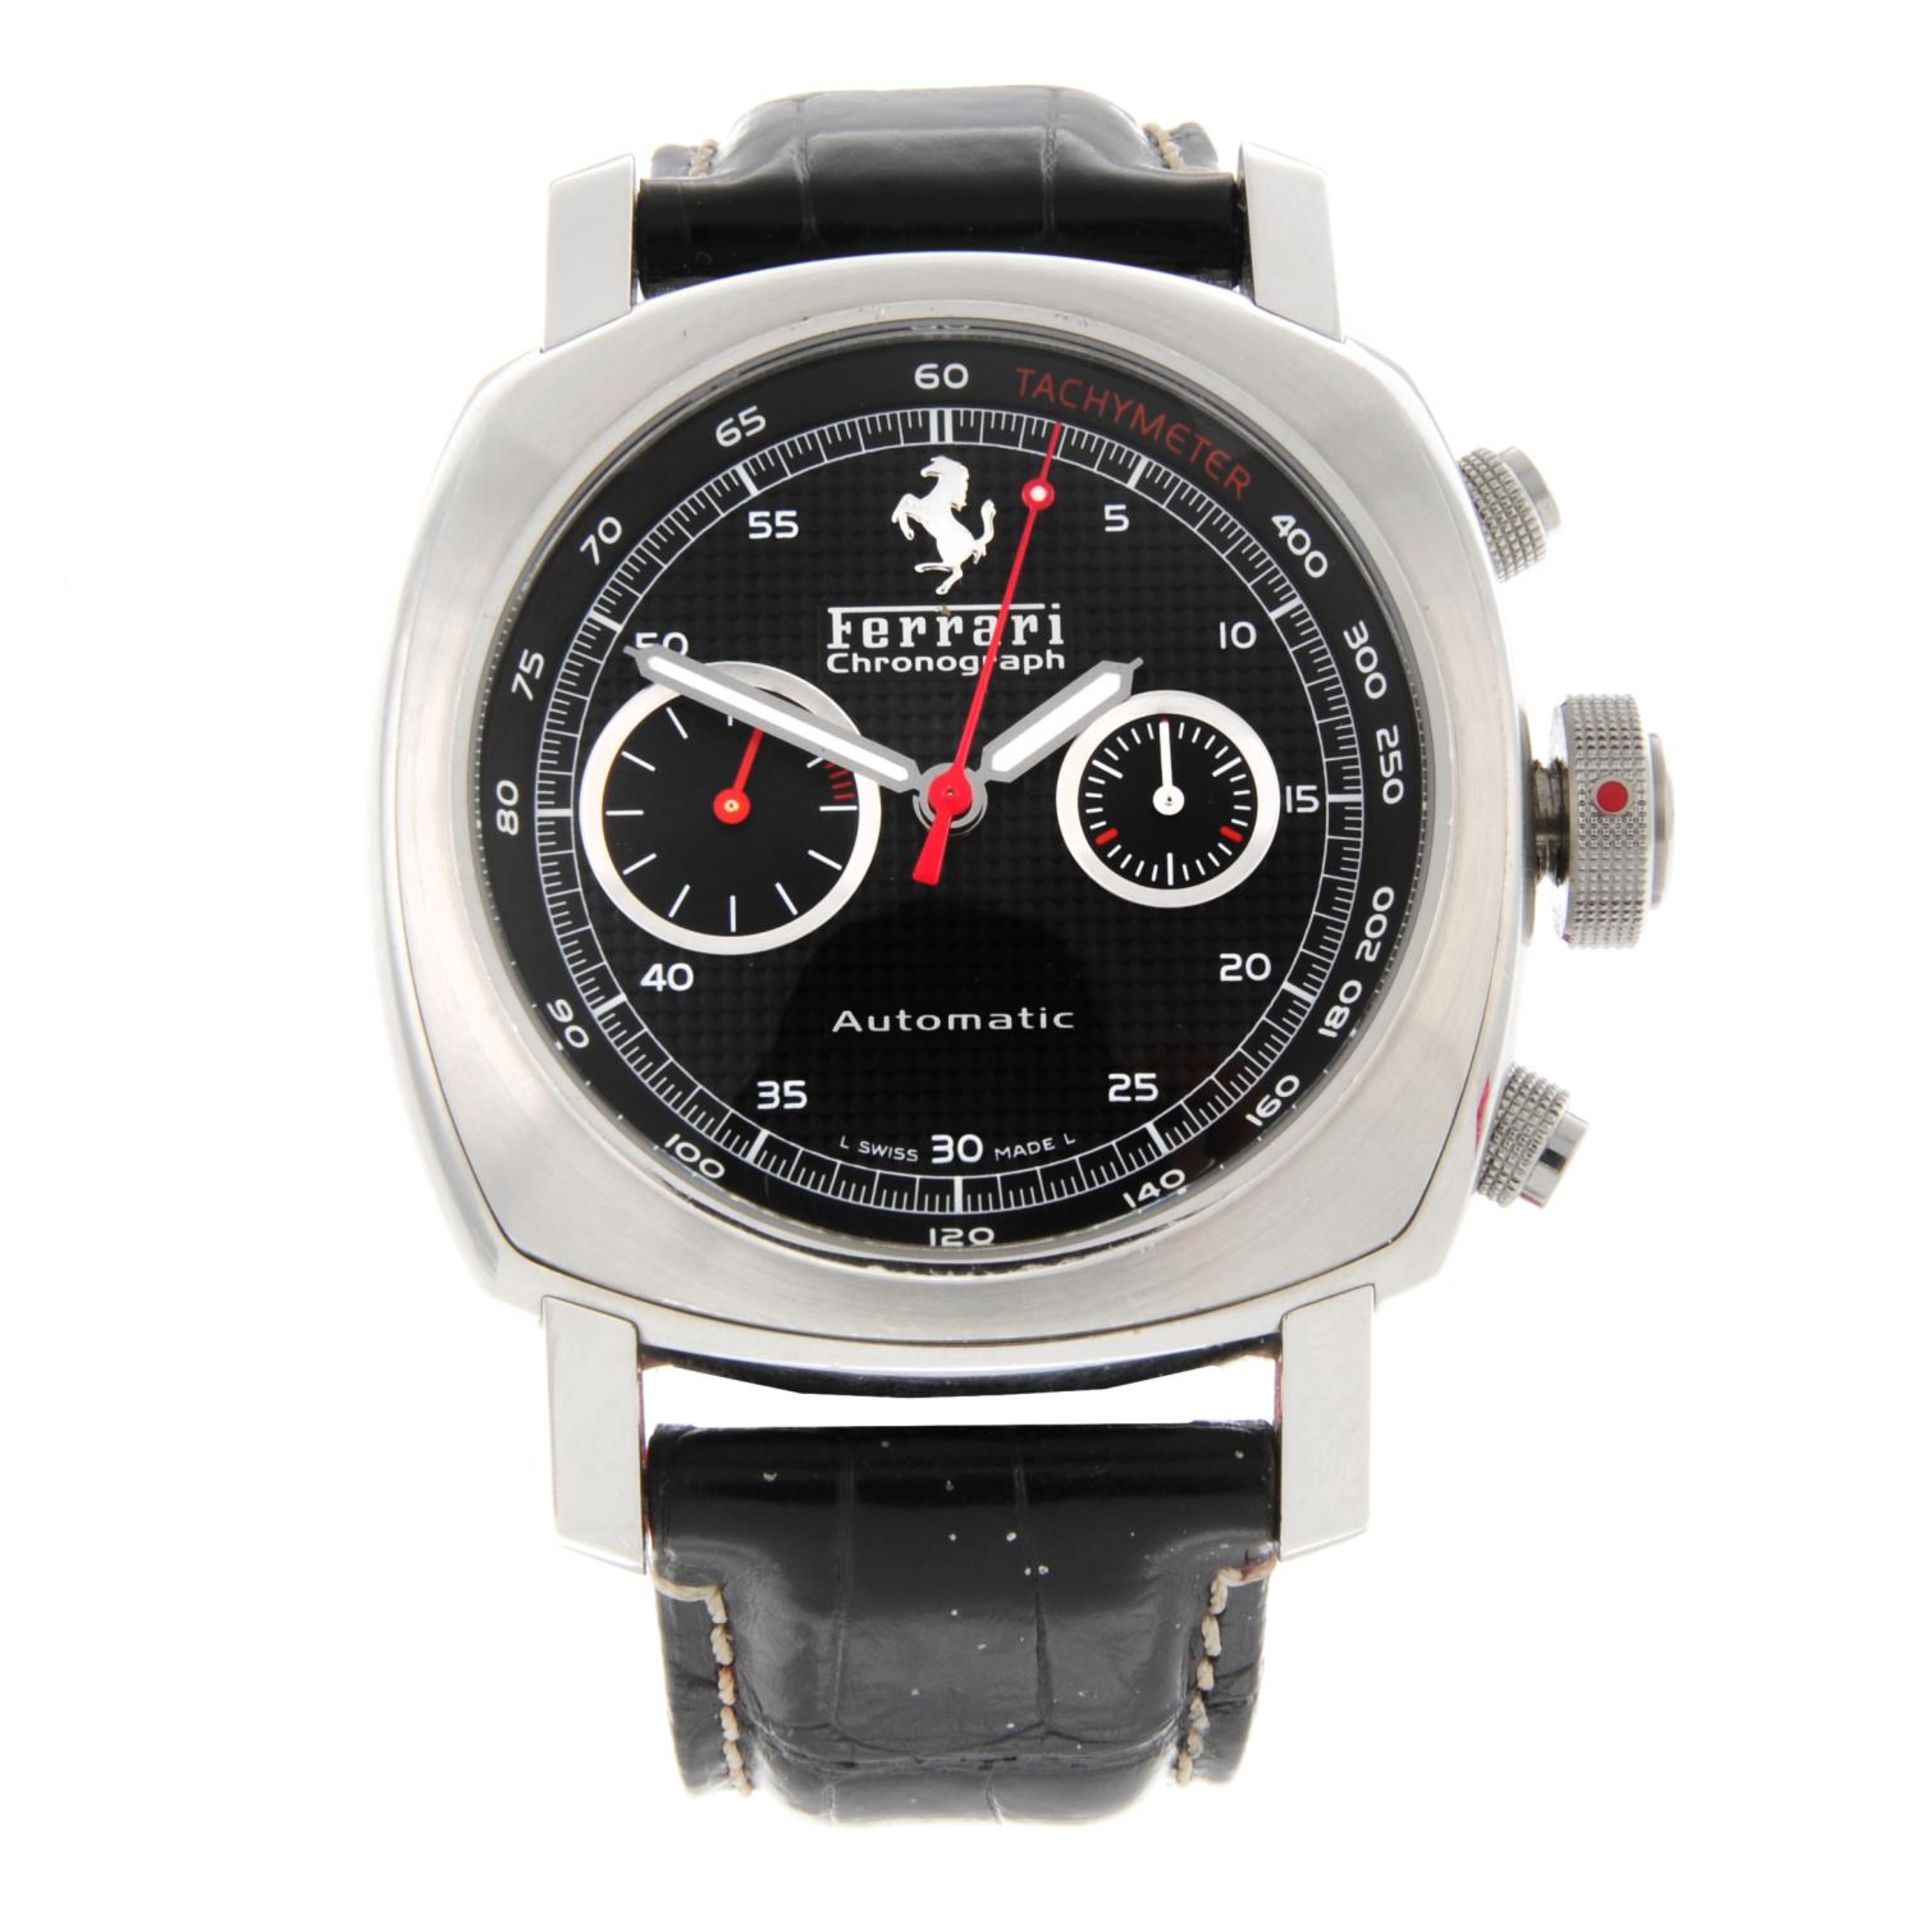 PANERAI - a gentleman's Ferrari Granturismo chronograph wrist watch.